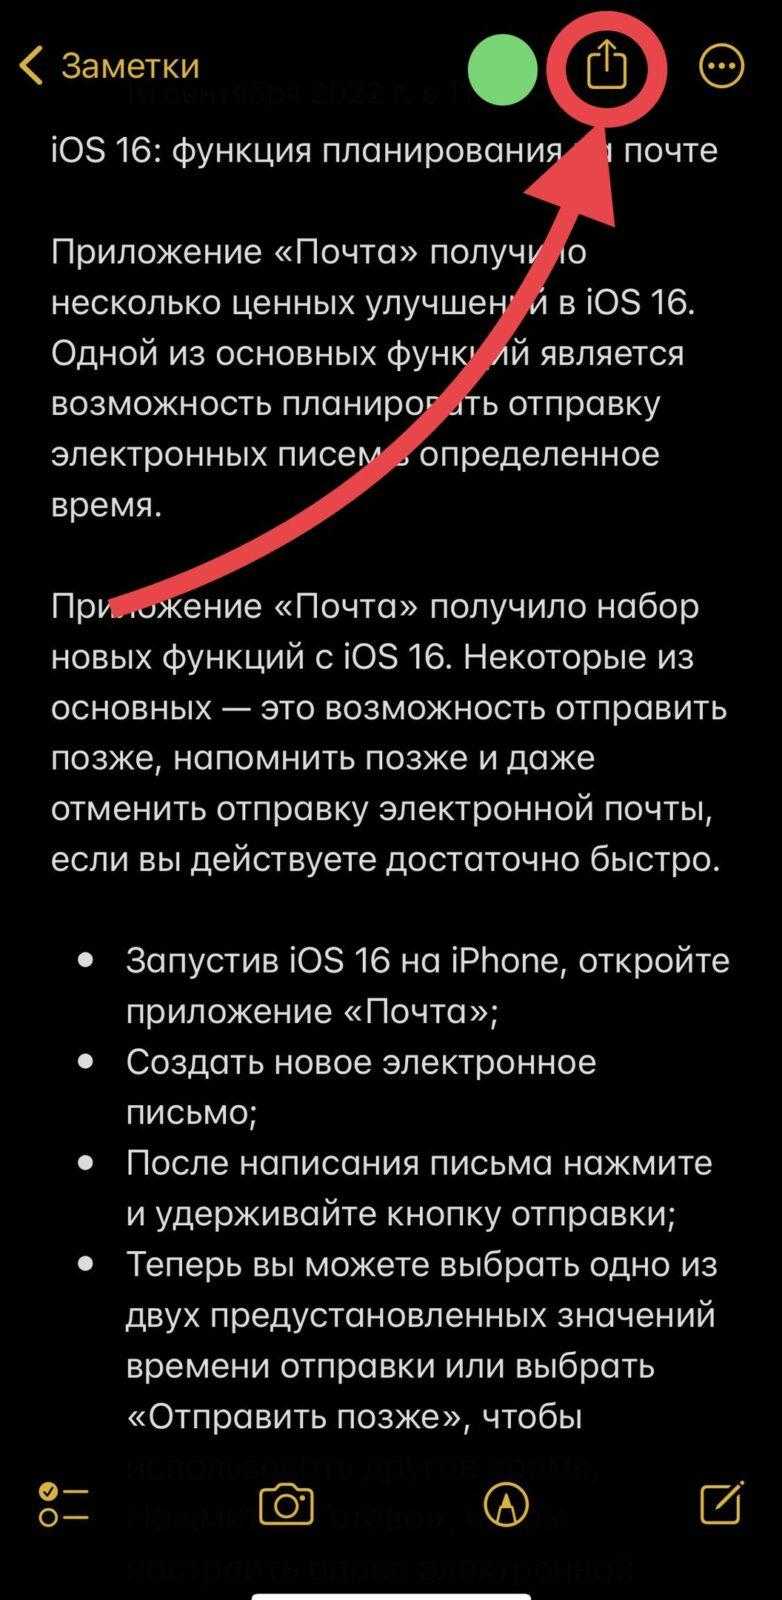 iOS 16: как использовать Совместную работу в iMessage (IxboLZkOiSlYNZsRLSNBp130QR4ttQD907ShwZOyC ZhRmhRfBOEIHEMtm1h87w etDwlGq 2hZCWoMBTWbCQdge)